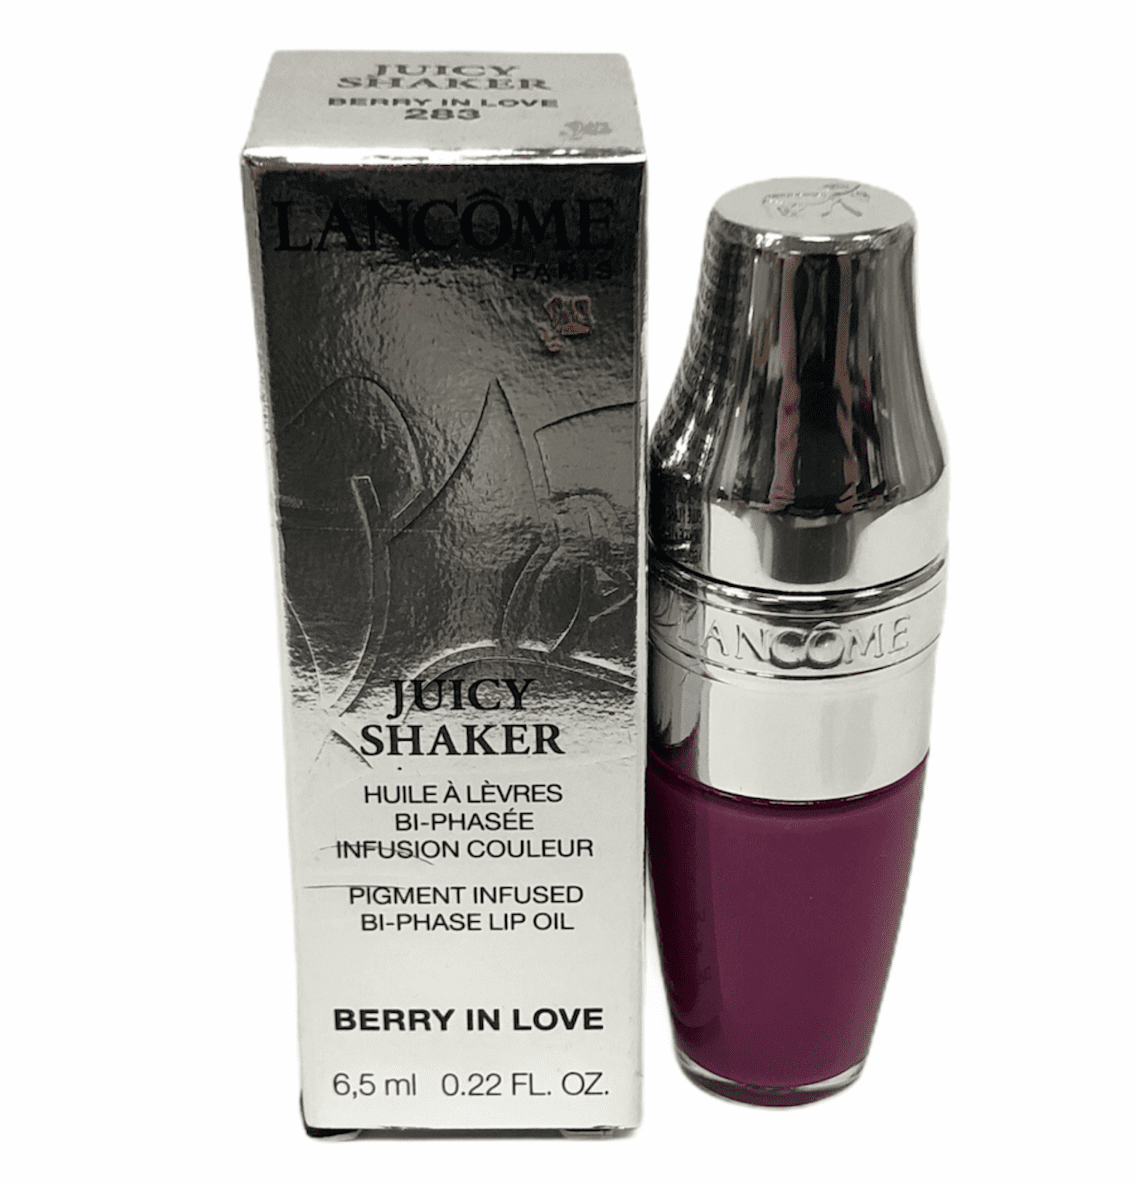 Crush Interpretive Pelmel LANCOME Juicy Shaker Pigment Infused Bi-Phase Lip Oil 6.5ml Shade #283  BERRY IN LOVE - Walmart.com